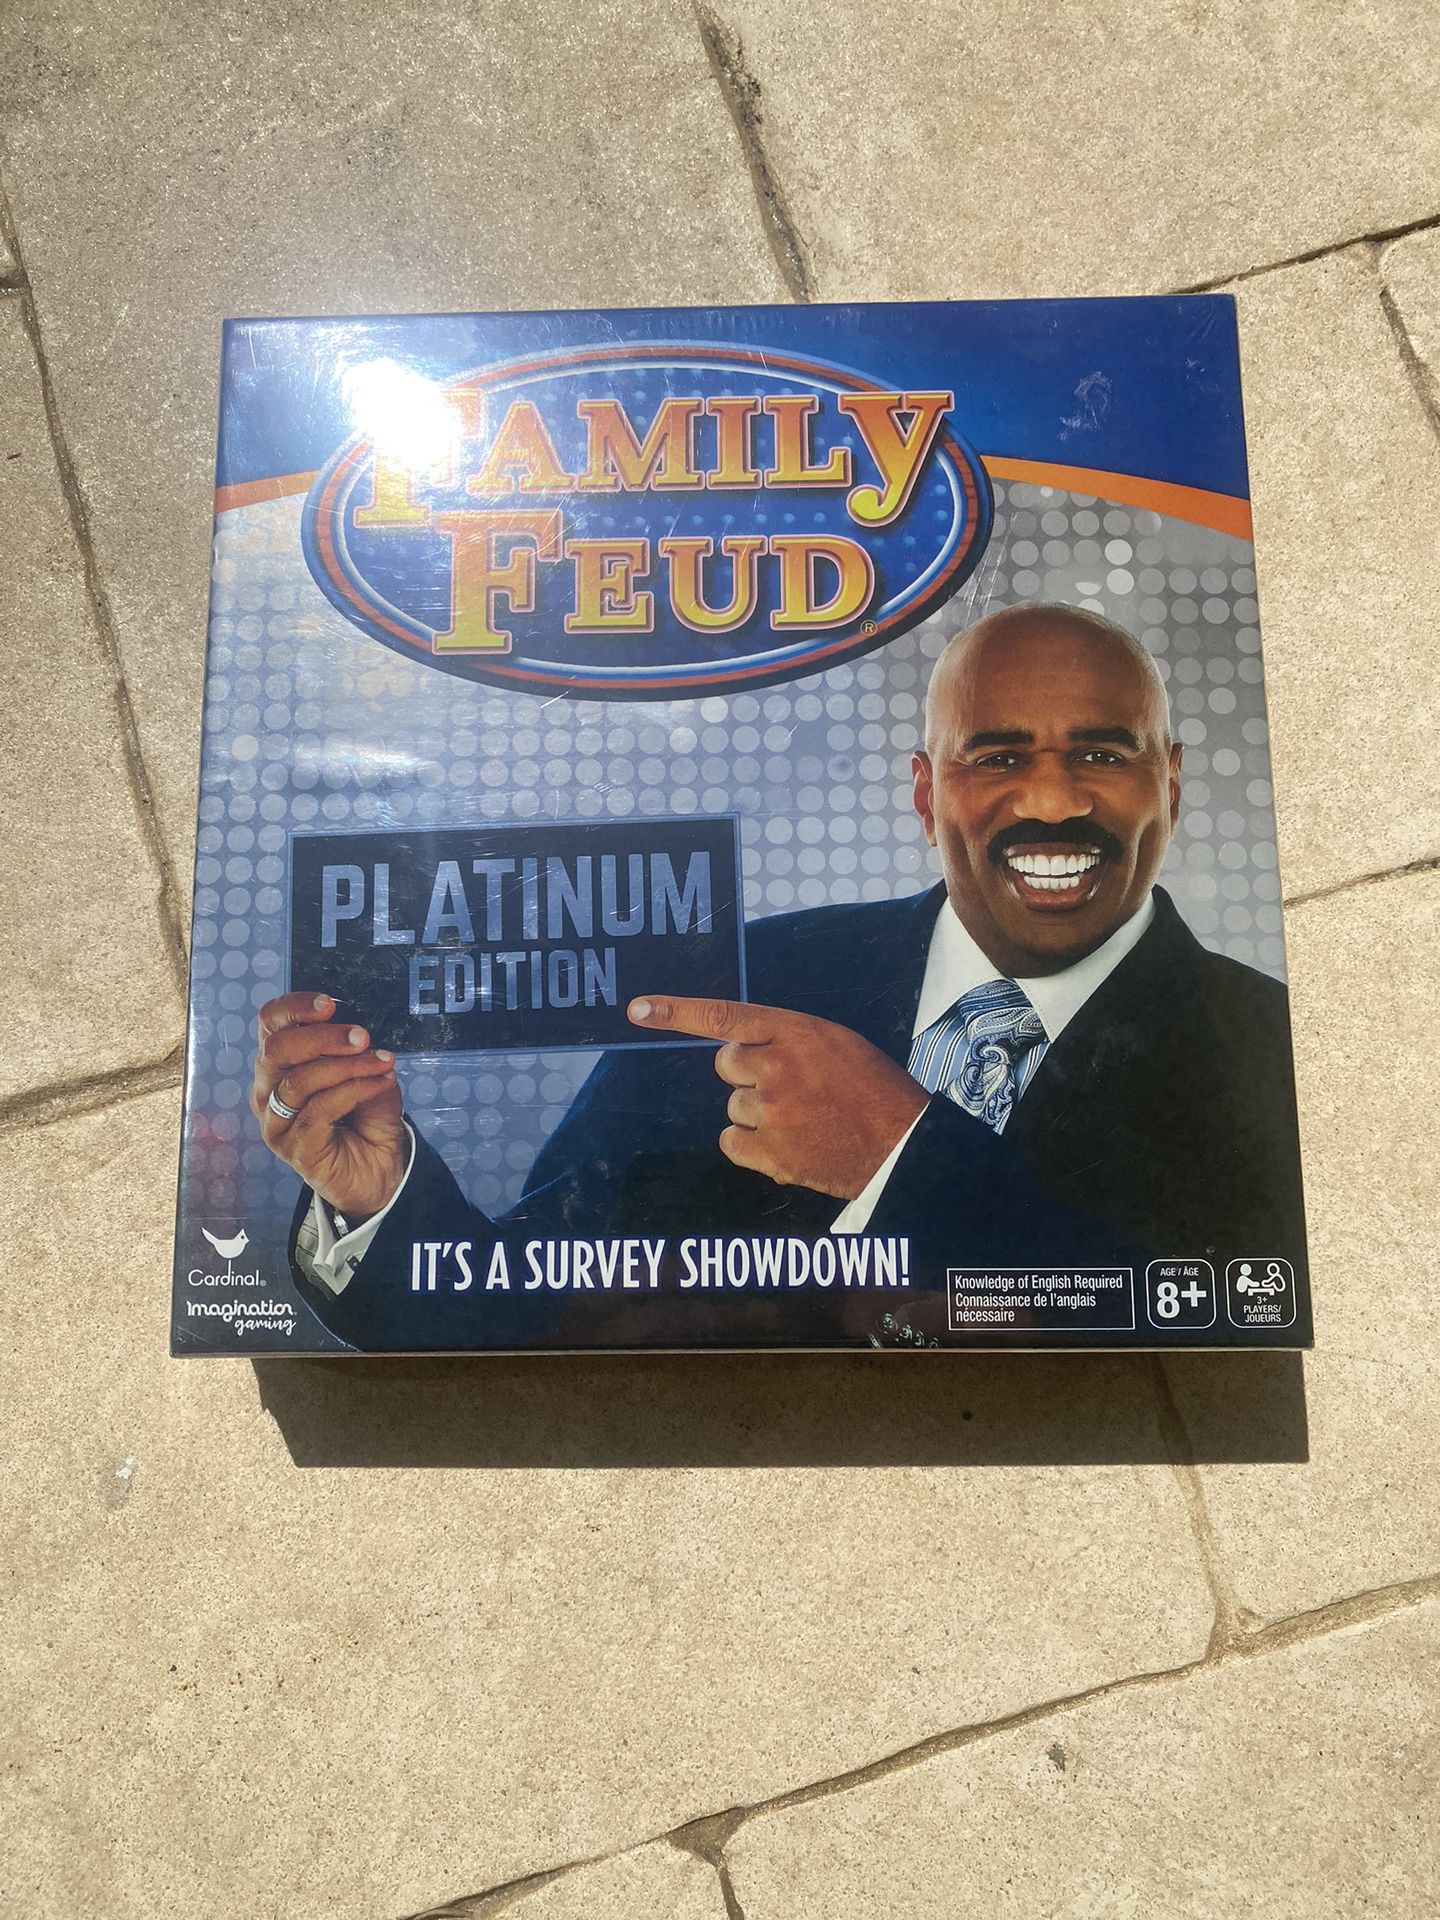 Family Feud Platinum Edition